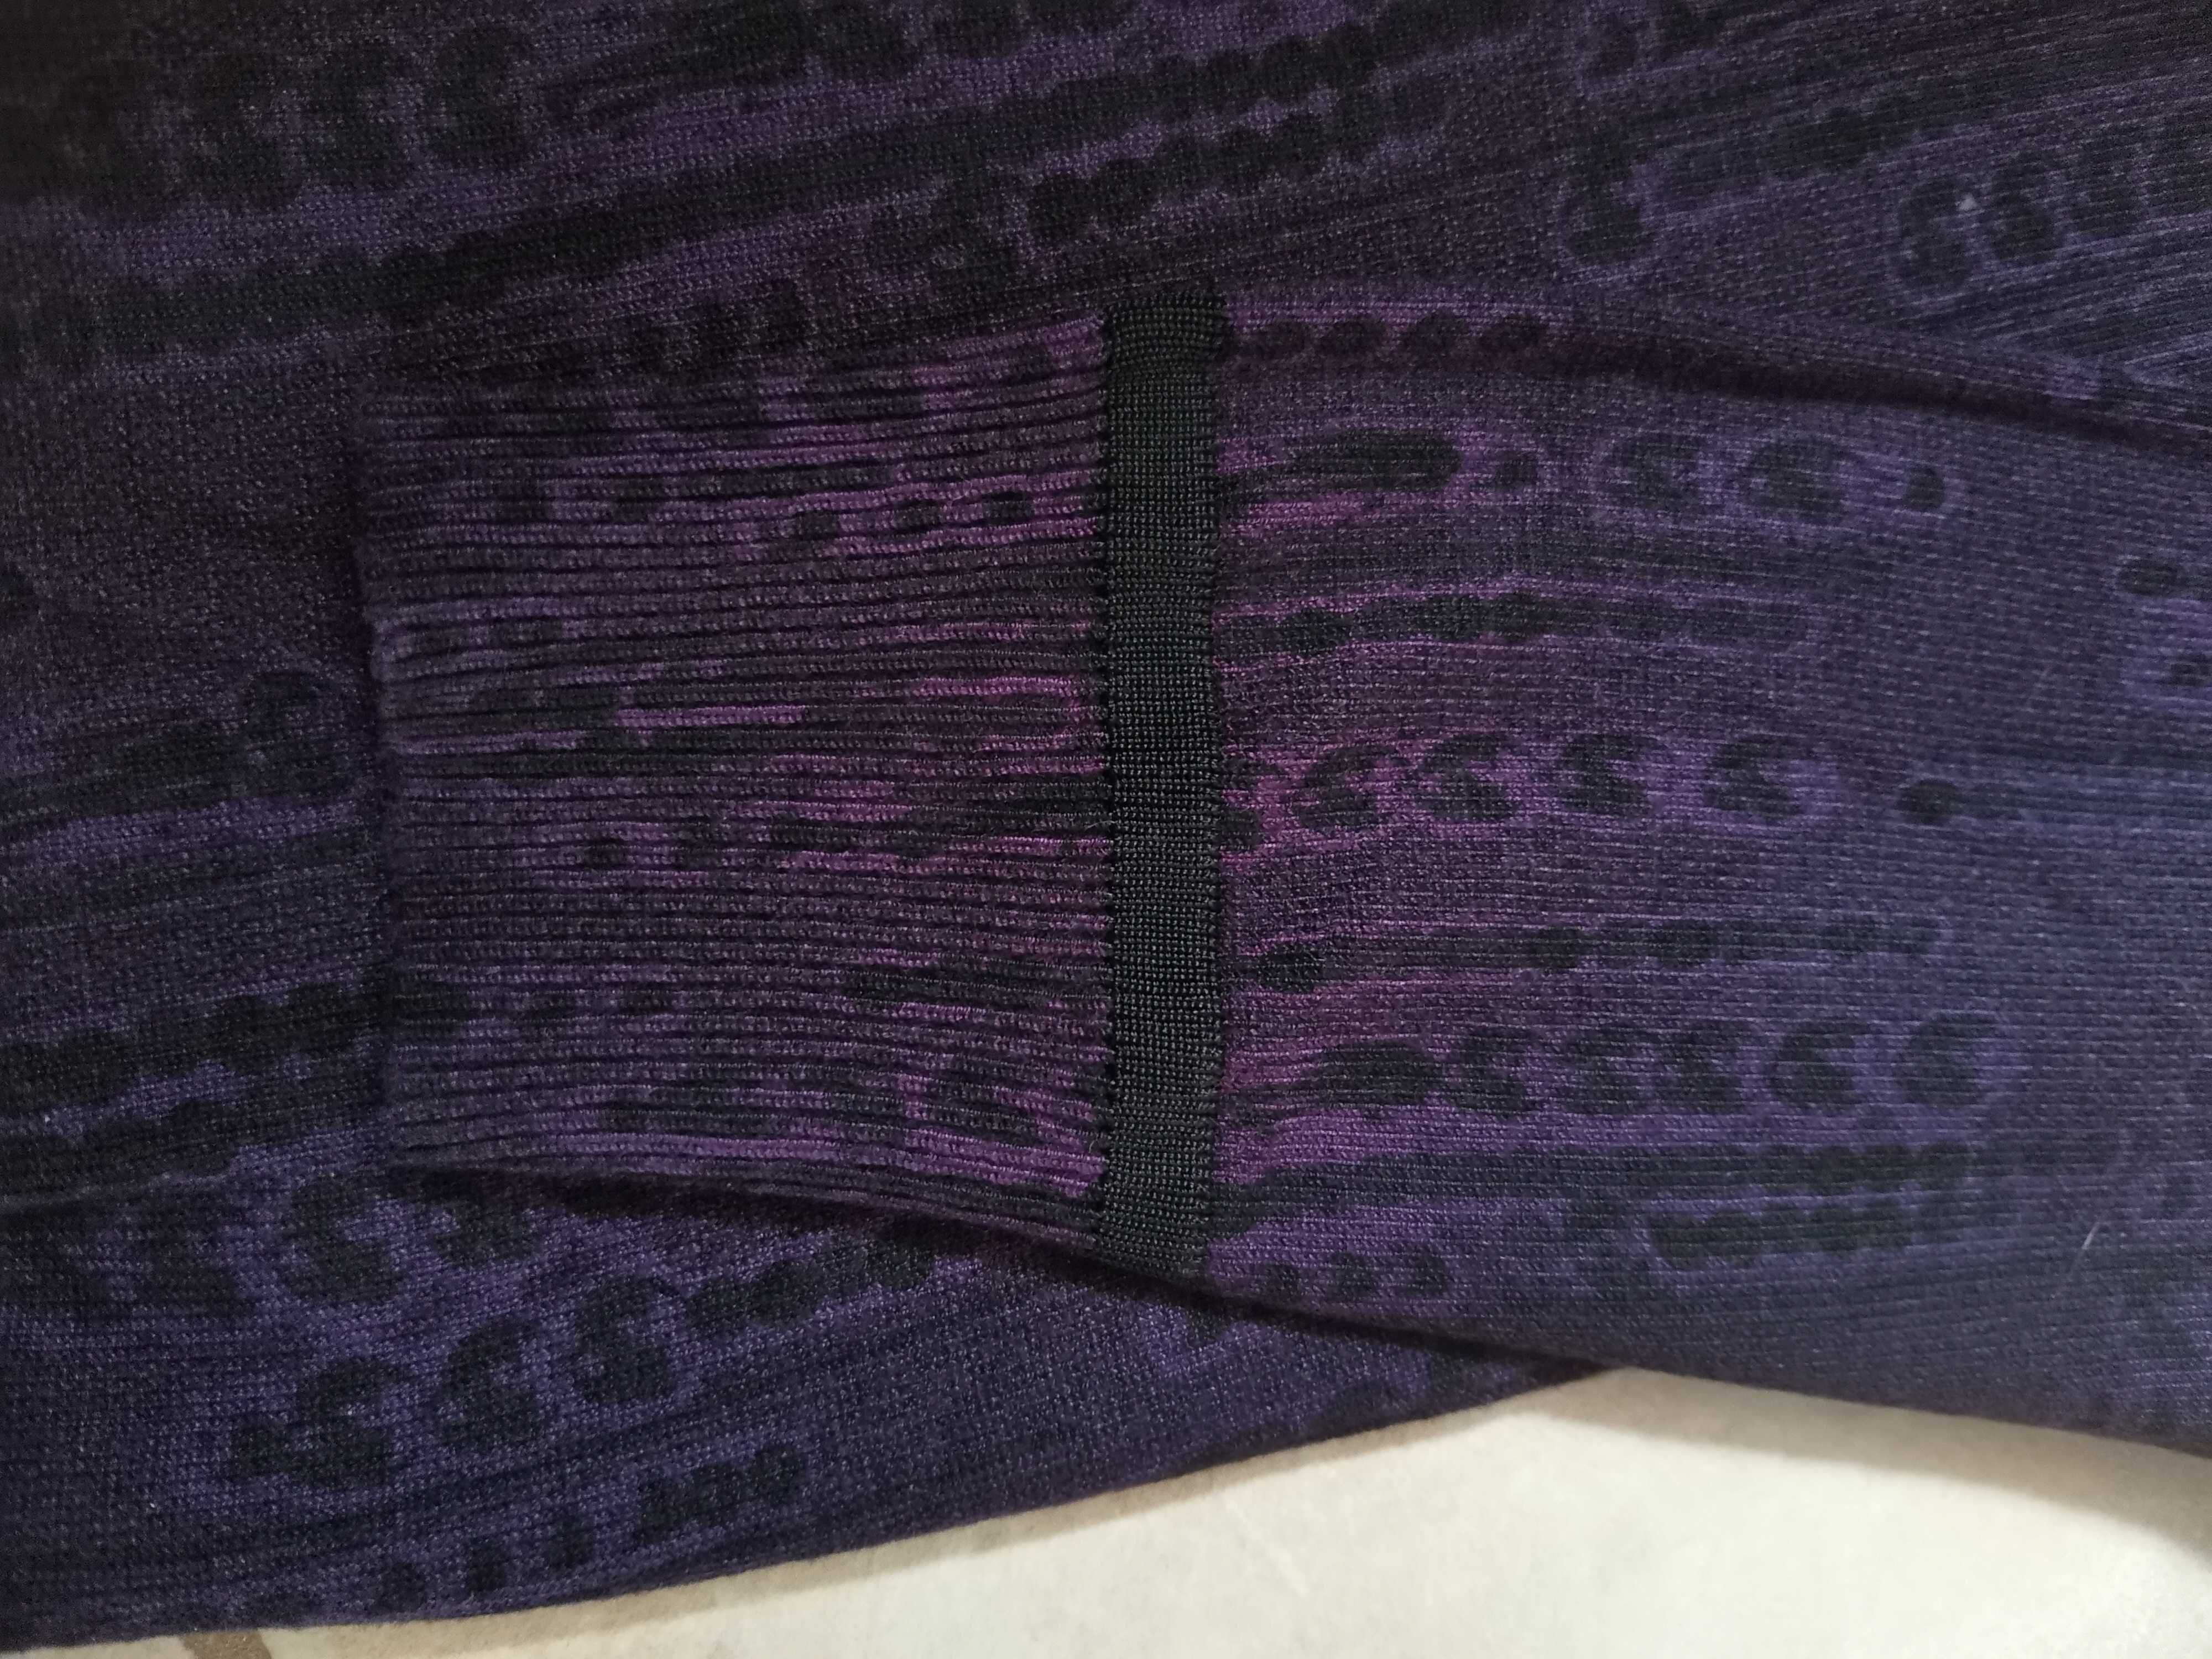 Sweter rozpinany na zatrzaski s lub m